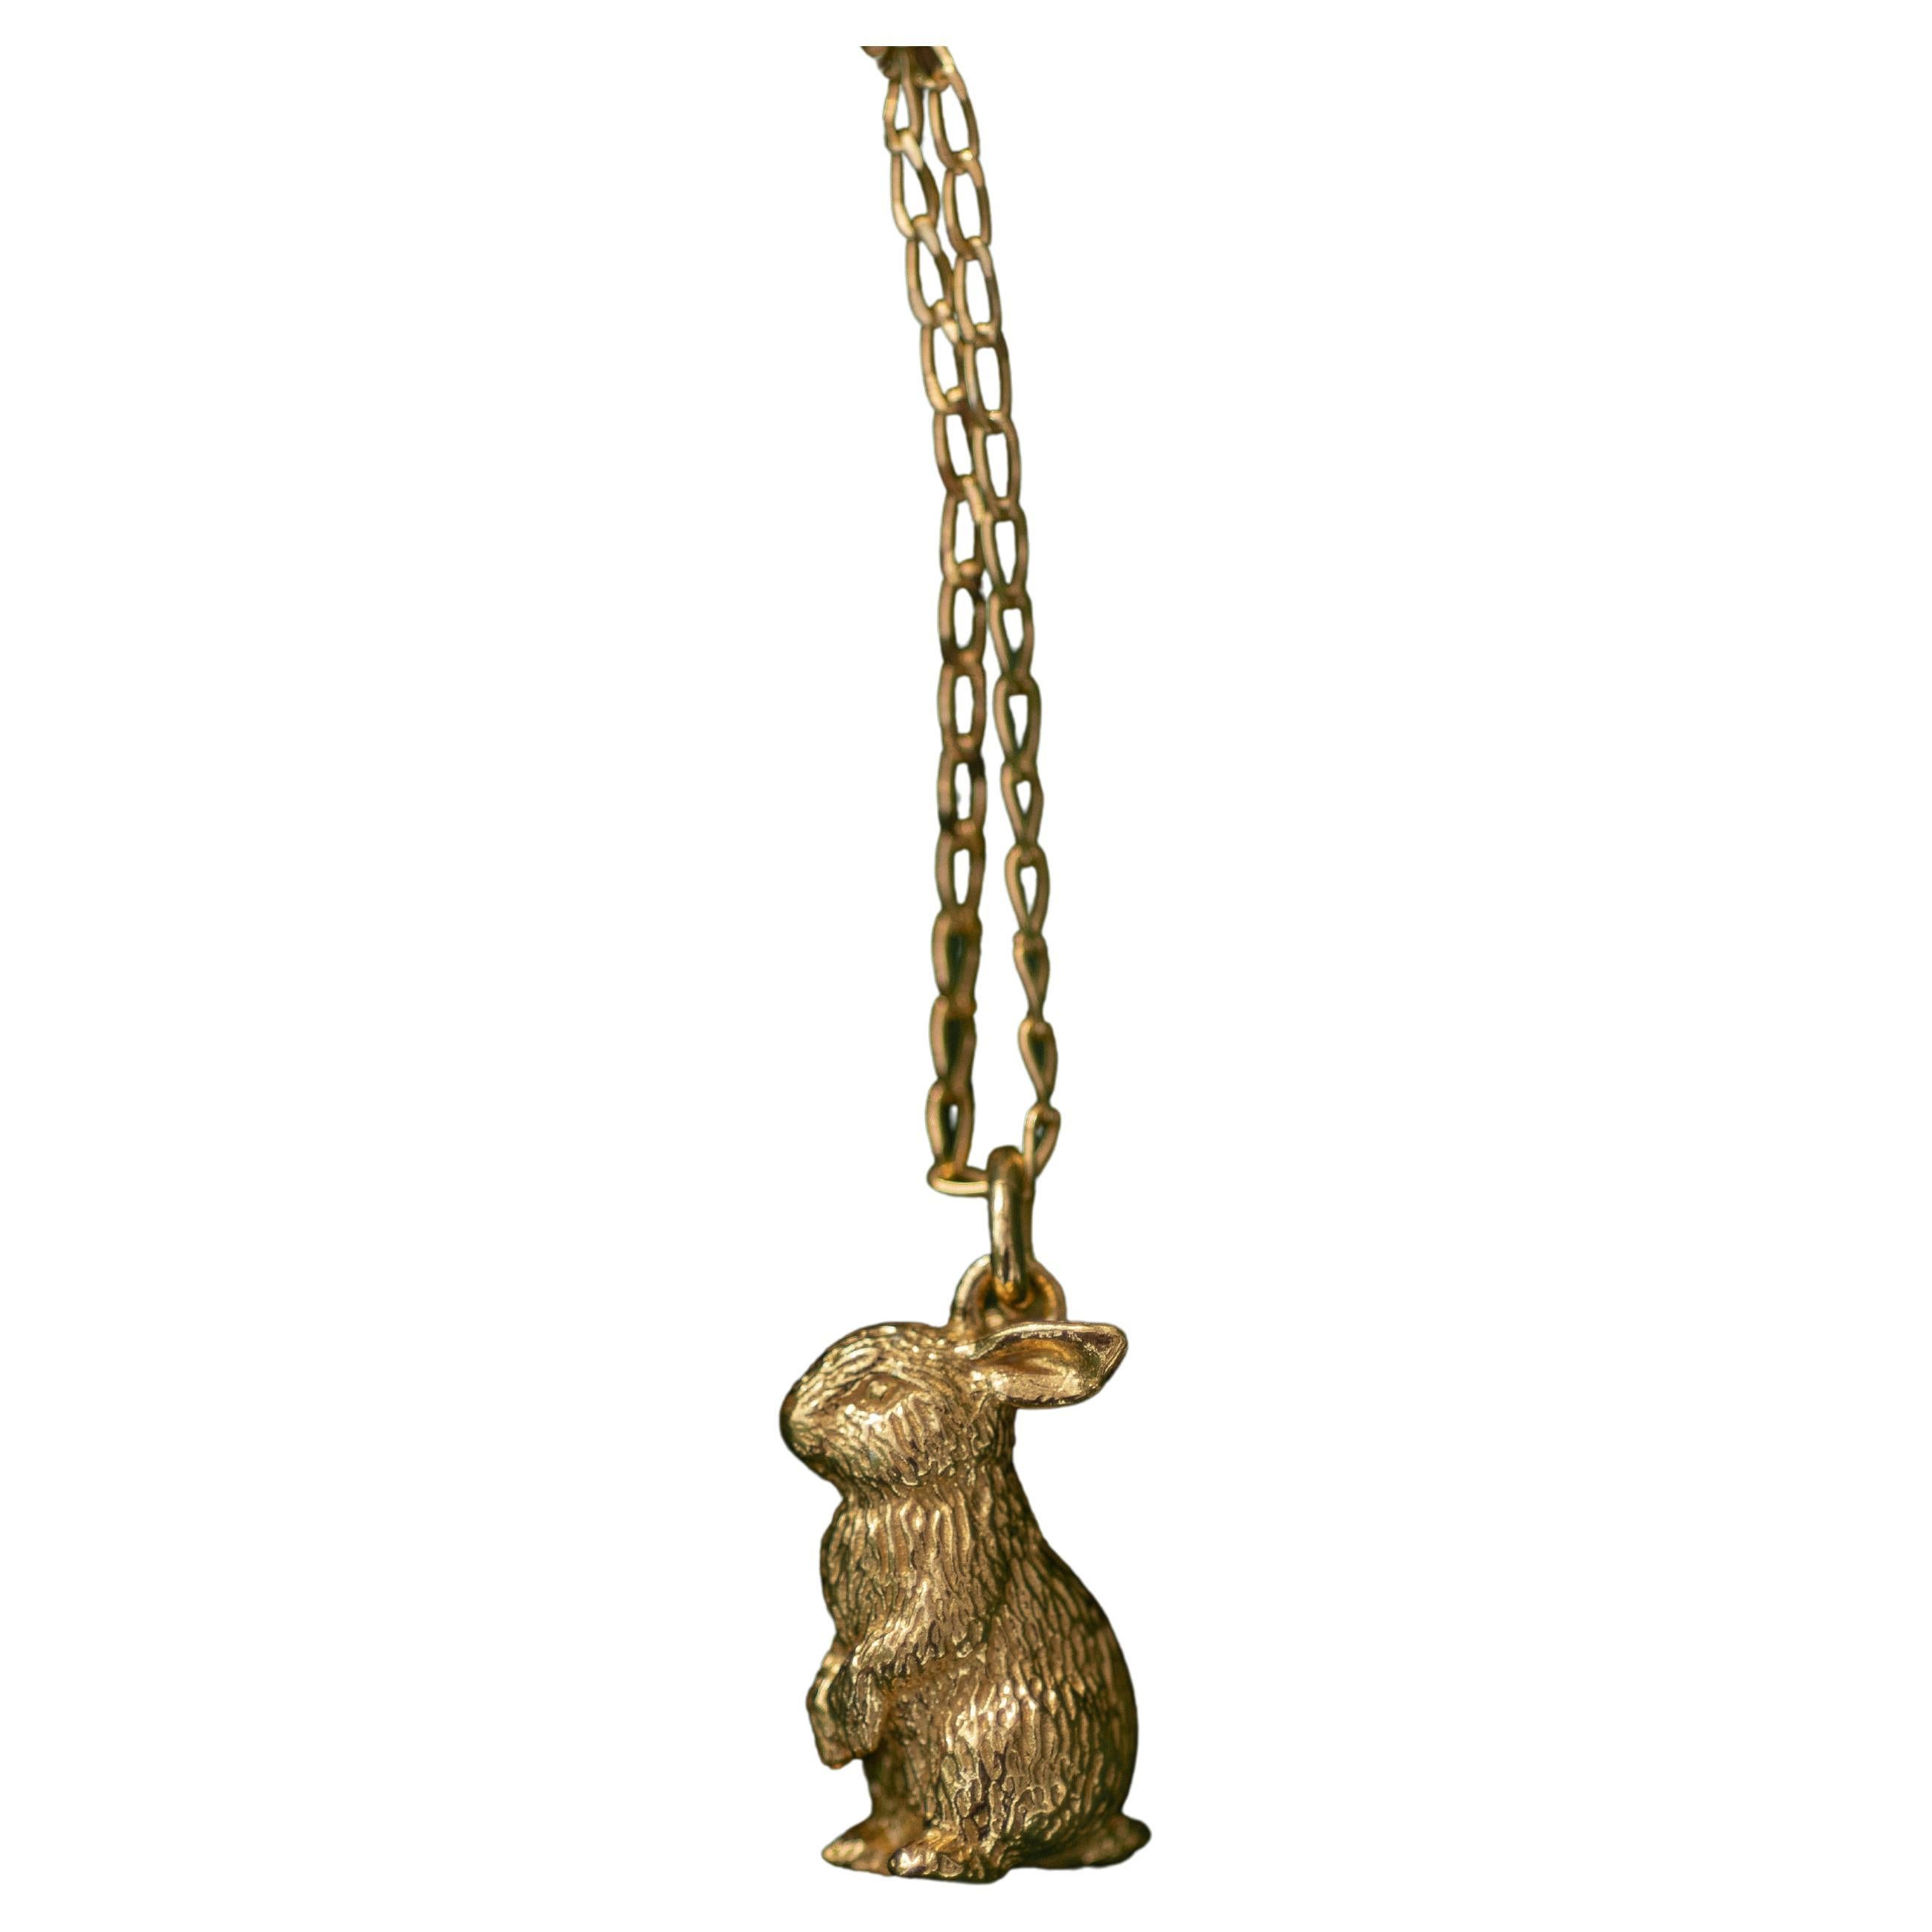 Gold Rabbit Pendant - 28 For Sale on 1stDibs | gold bunny pendant